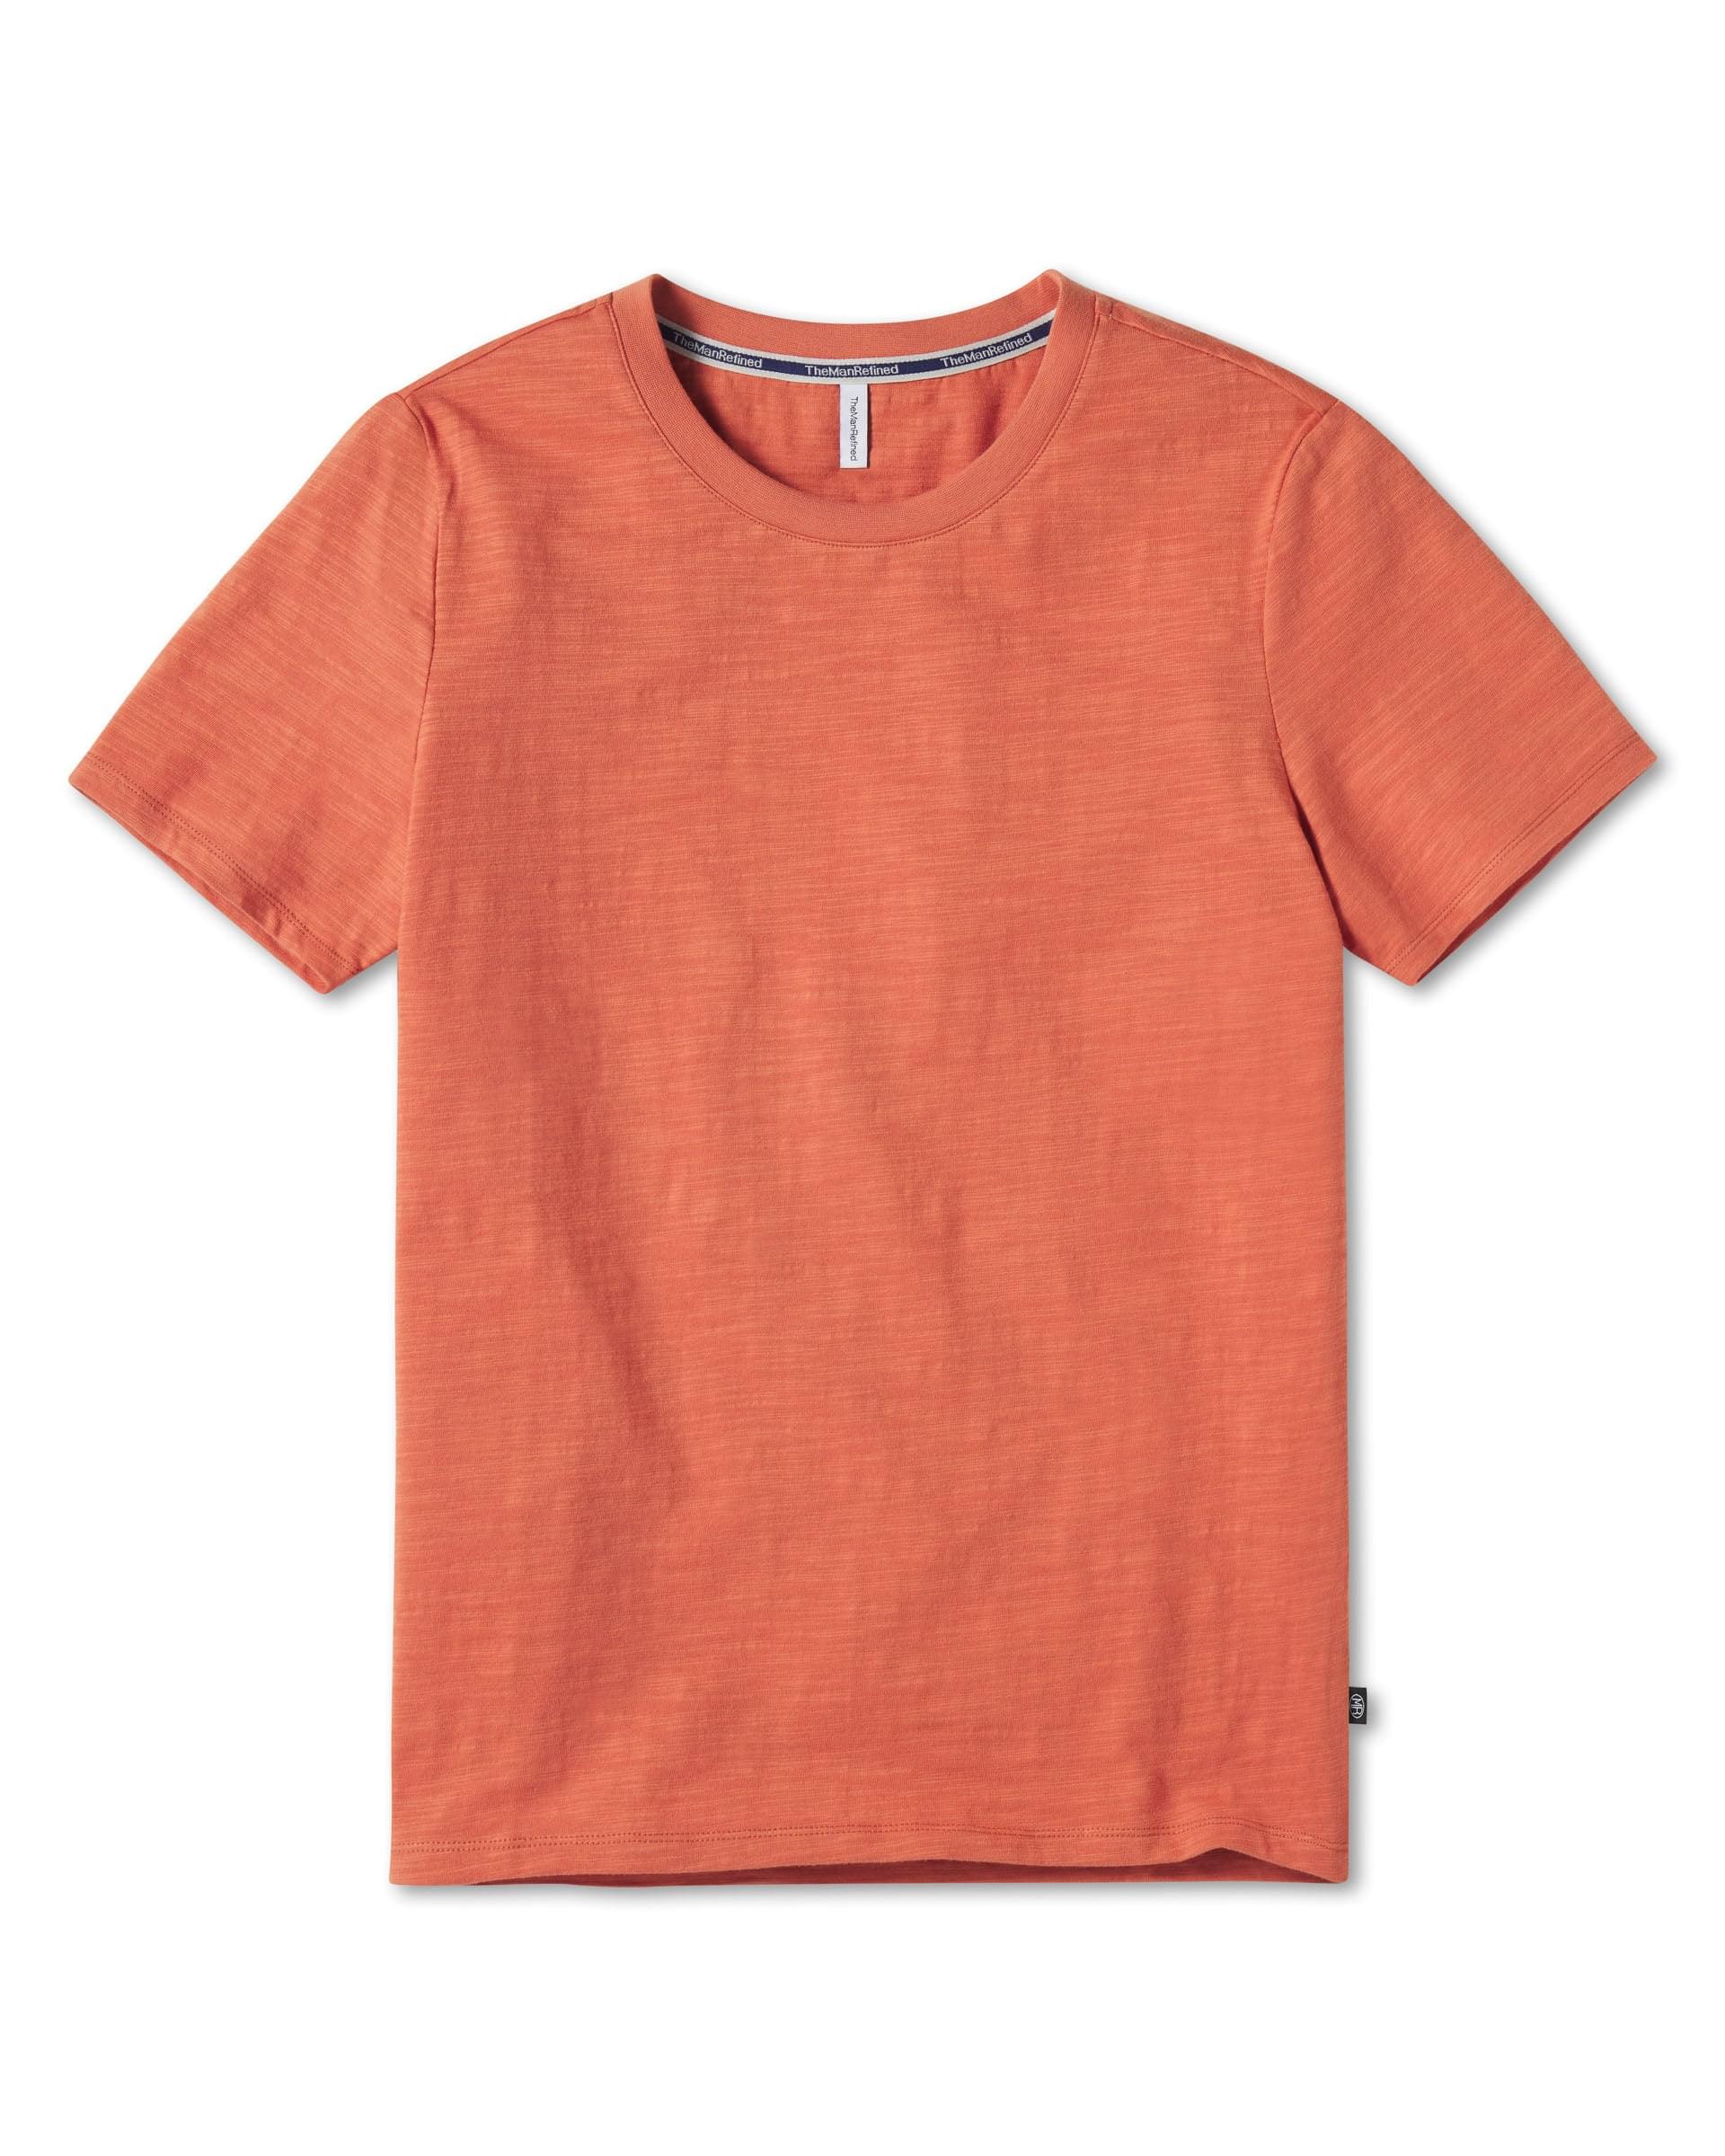 Cotton Slub Jersey Crewneck T-Shirt - Apricot | The Man Refined